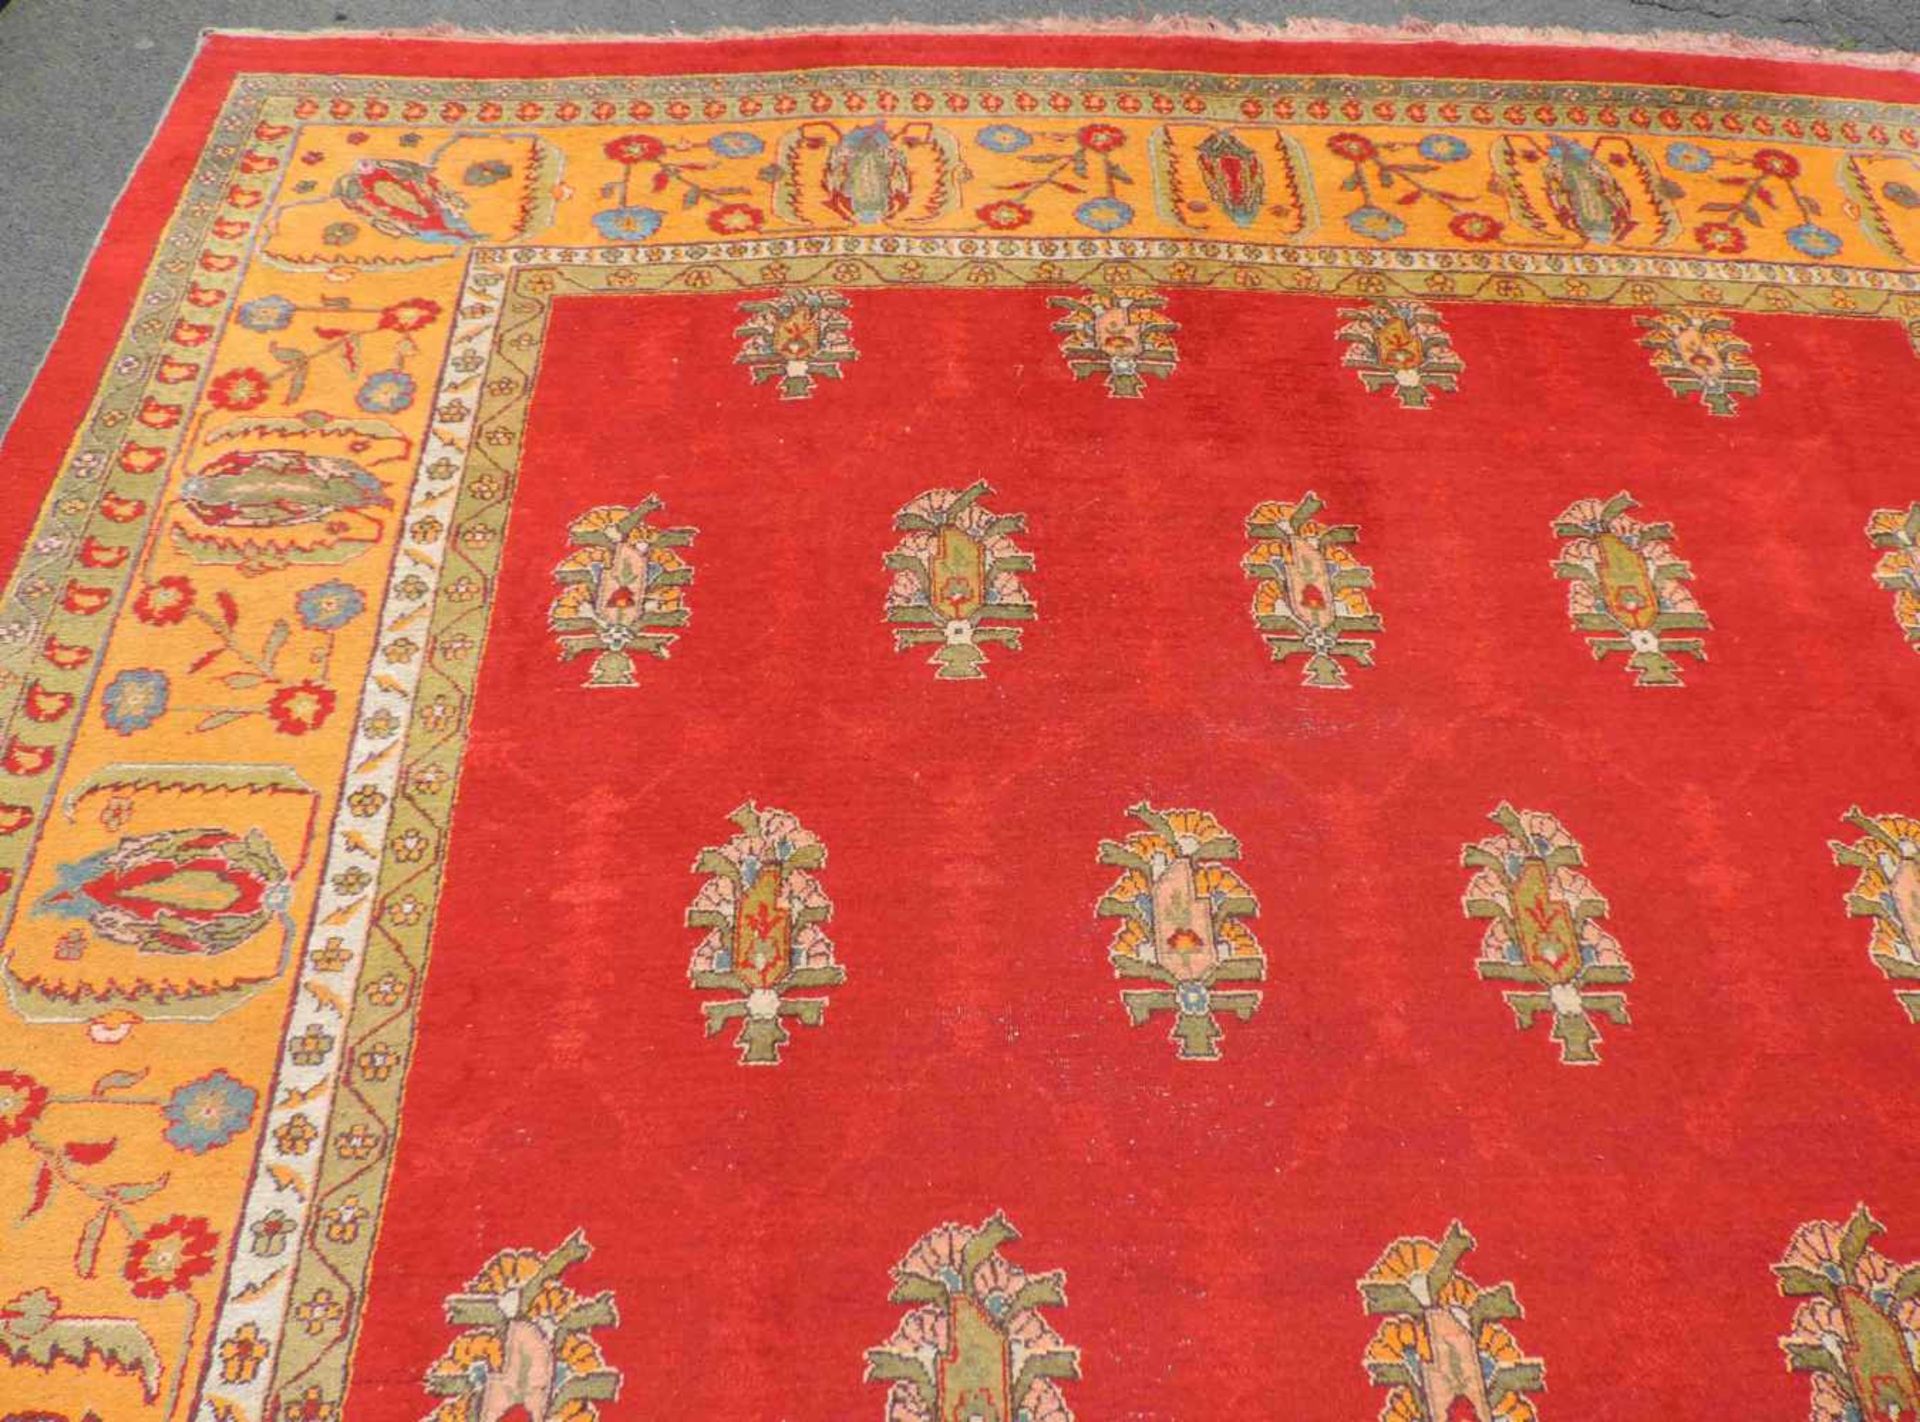 Mughal carpet. Deccani, India around 1800. - Image 7 of 10